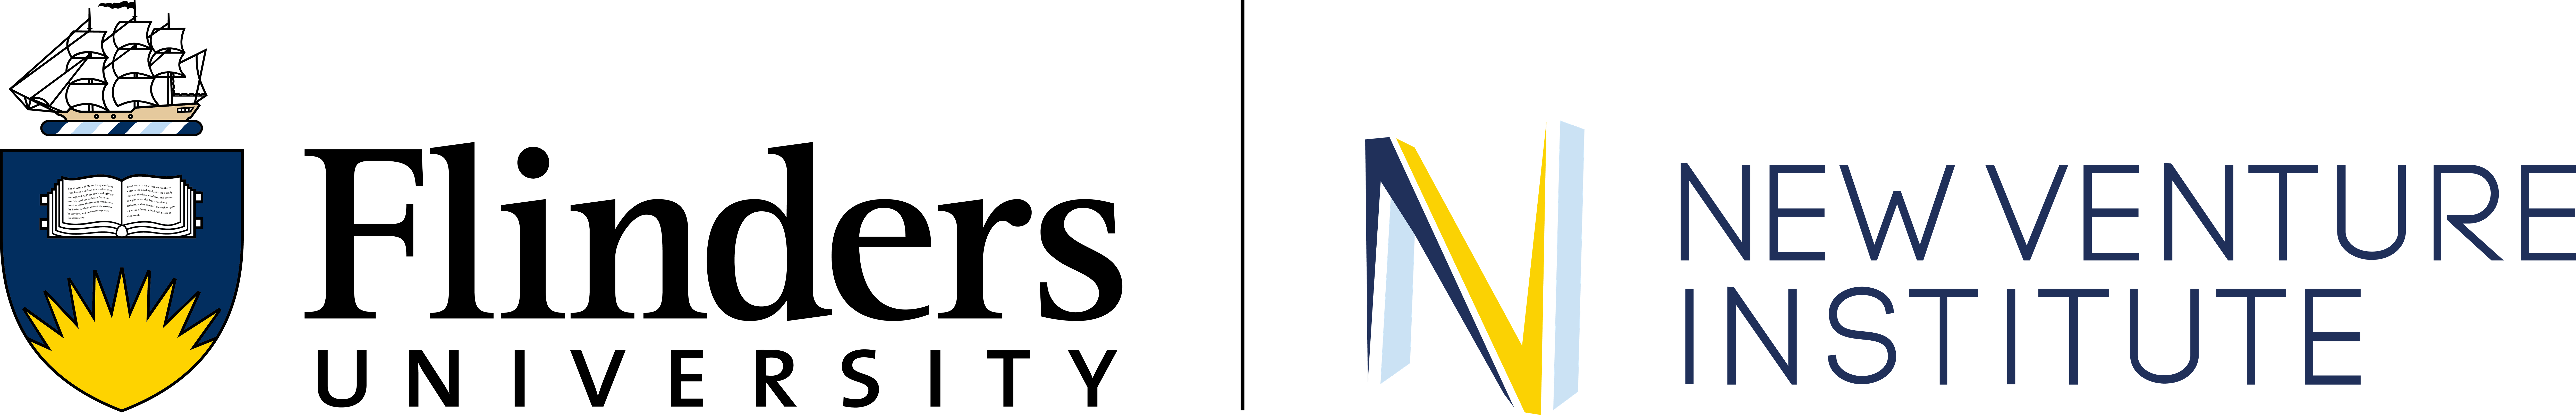 Flinders NVI logo